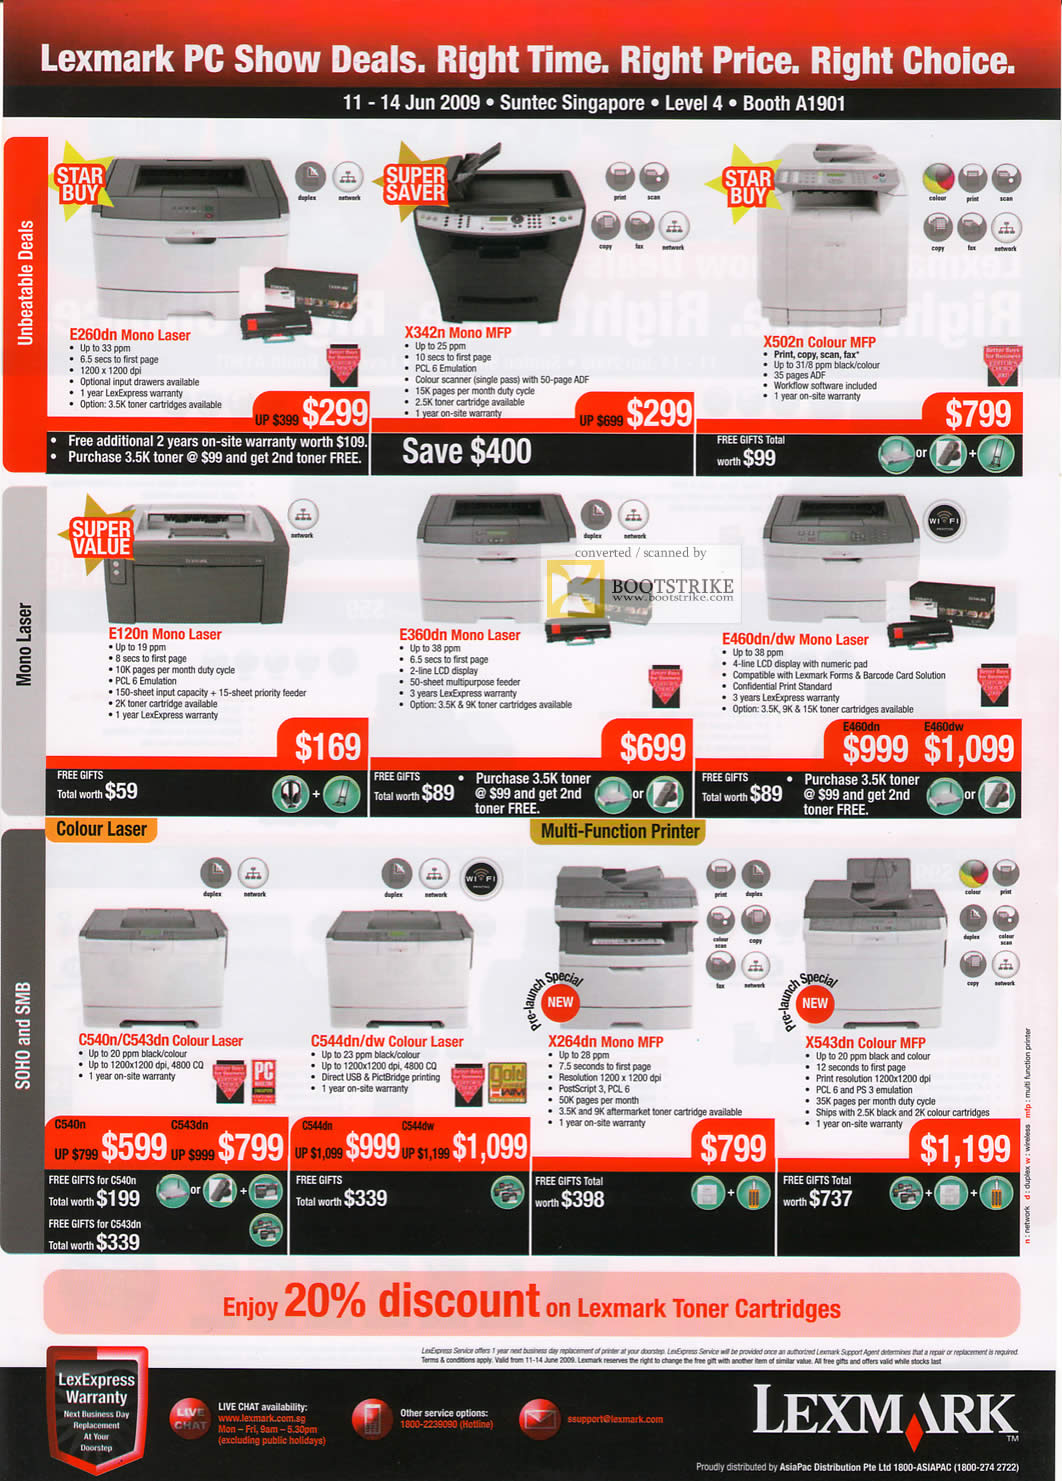 PC Show 2009 price list image brochure of Lexmark Printers Laser Mono SOHO SMB Colour